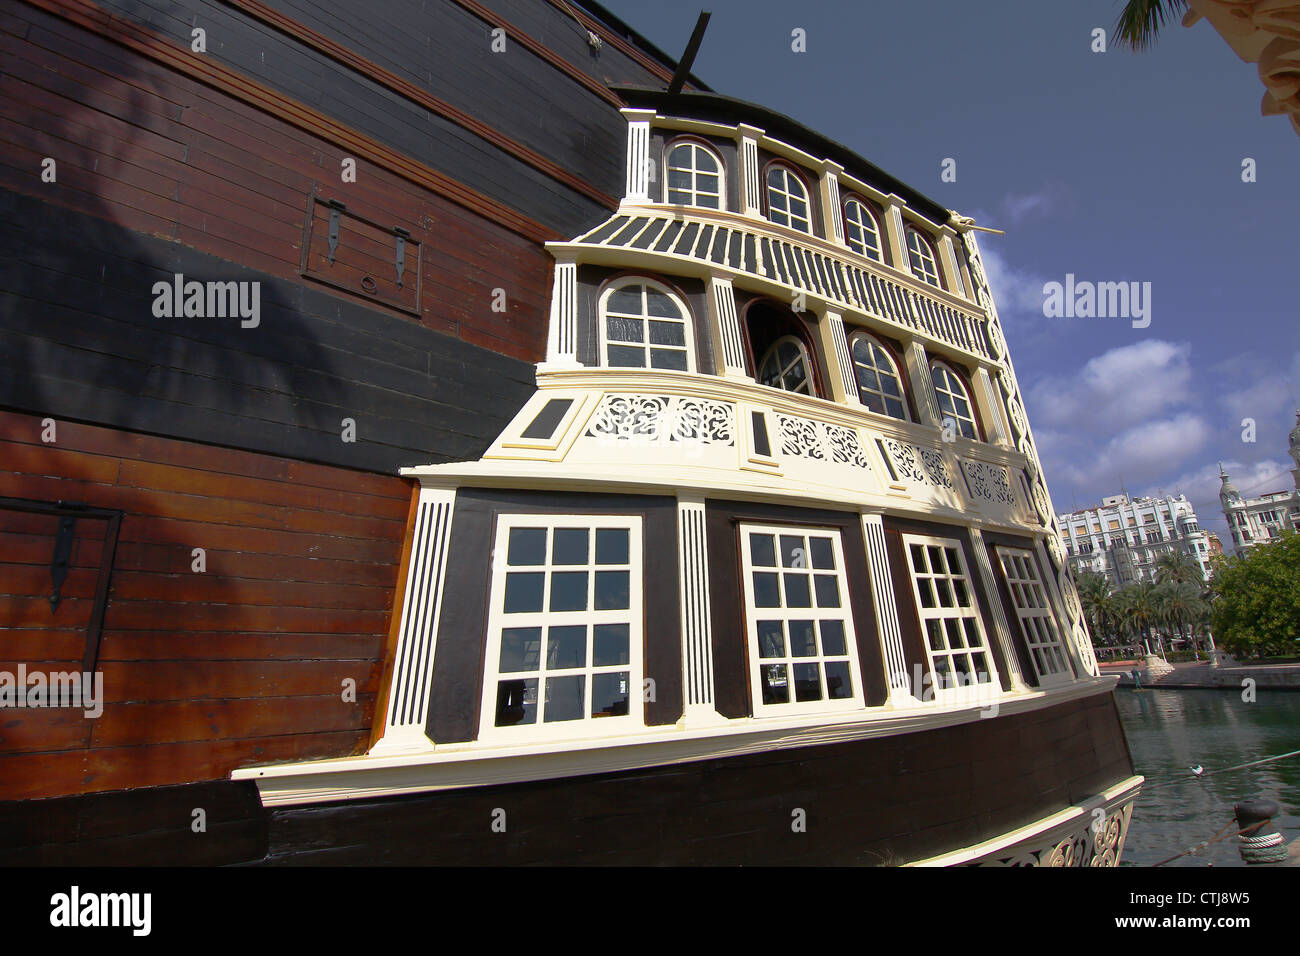 Historic and famous stern of the Spanish galleon Santisima Trinidad Stock Photo